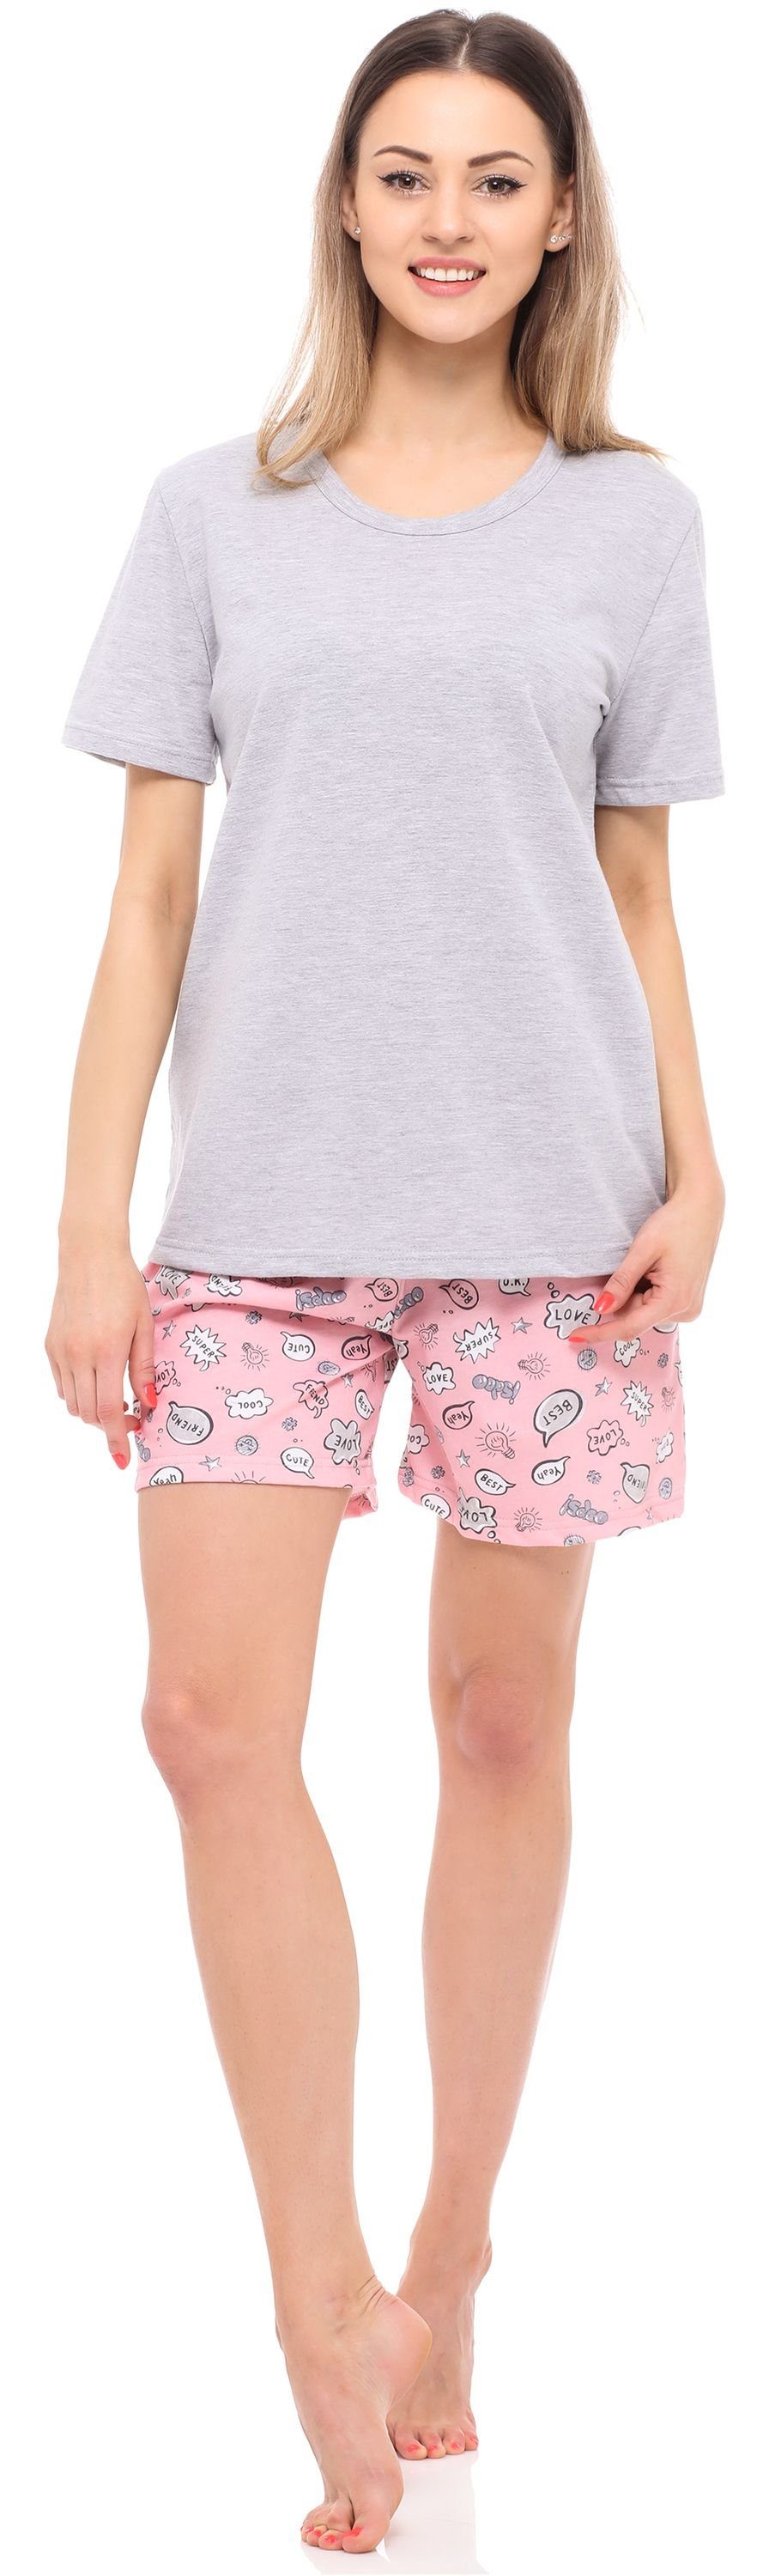 Merry Style Schlafanzug Pyjama Zweiteiler Kurz Pyjama Damen Set Schlafanzug Melange/Rosa MS10-177 Baumwolle